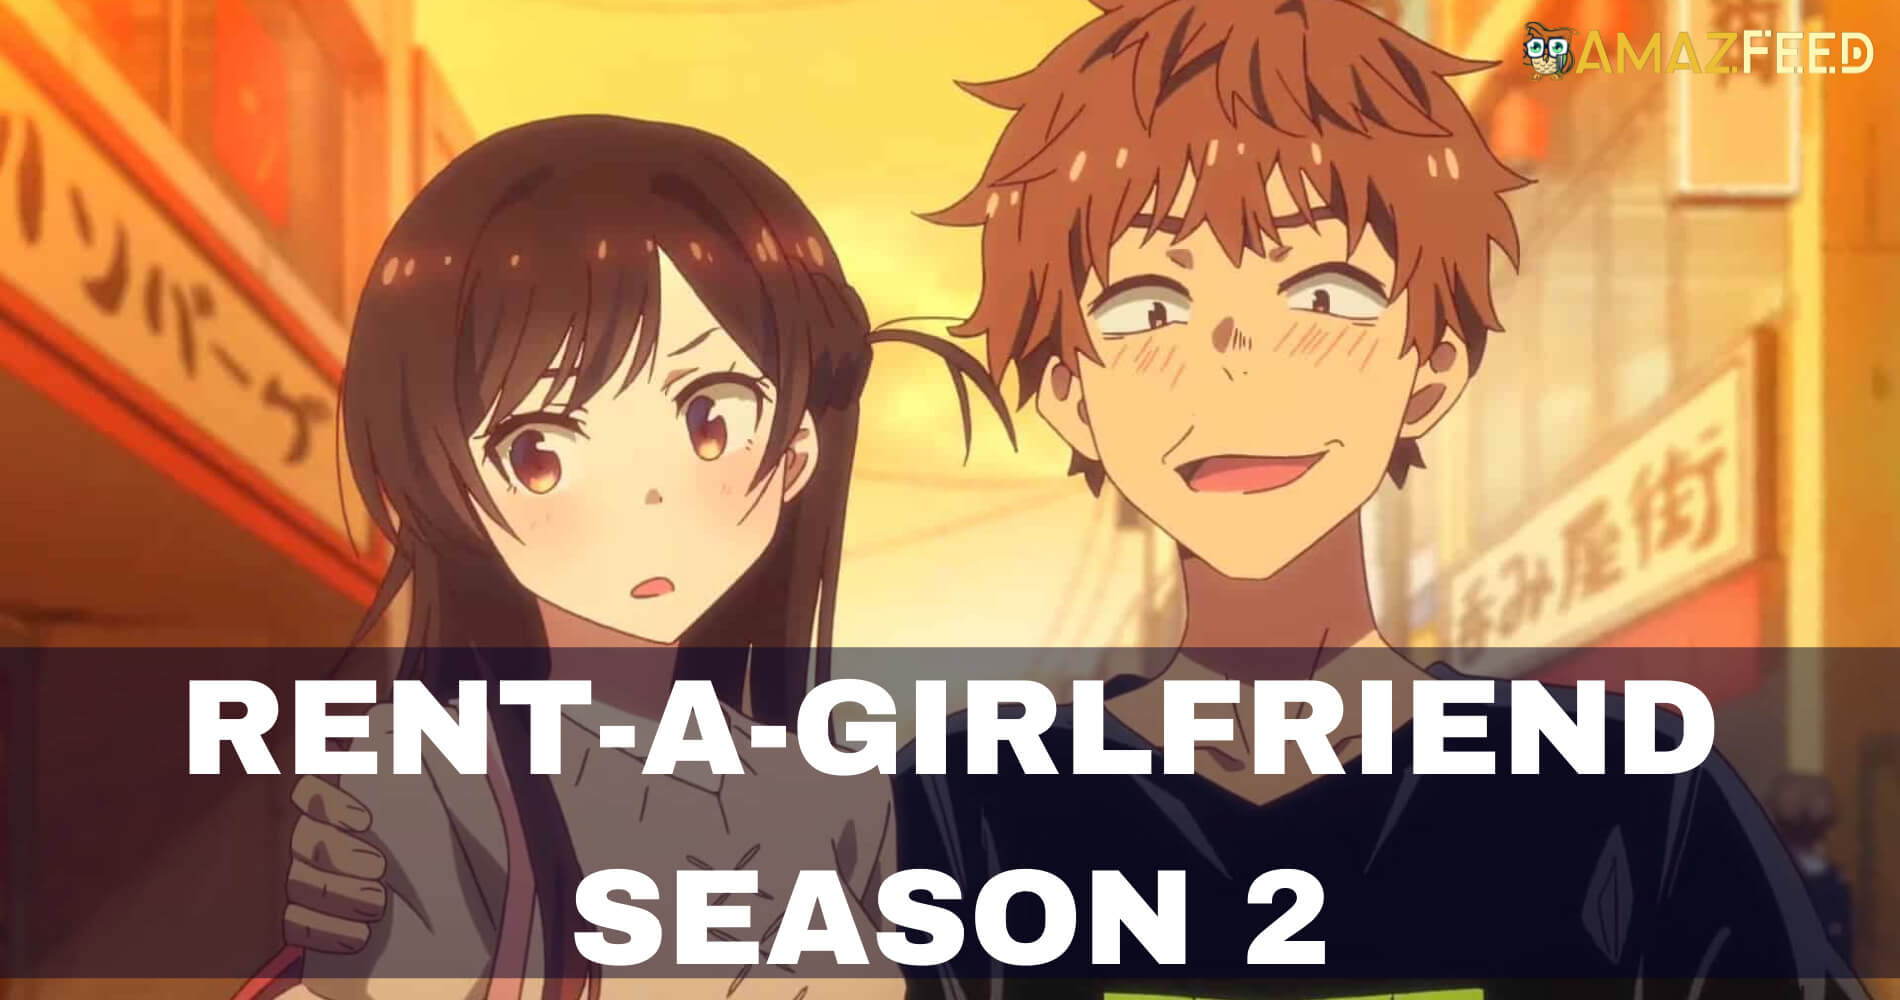 Where Will Rent-A-Girlfriend season 2 Release